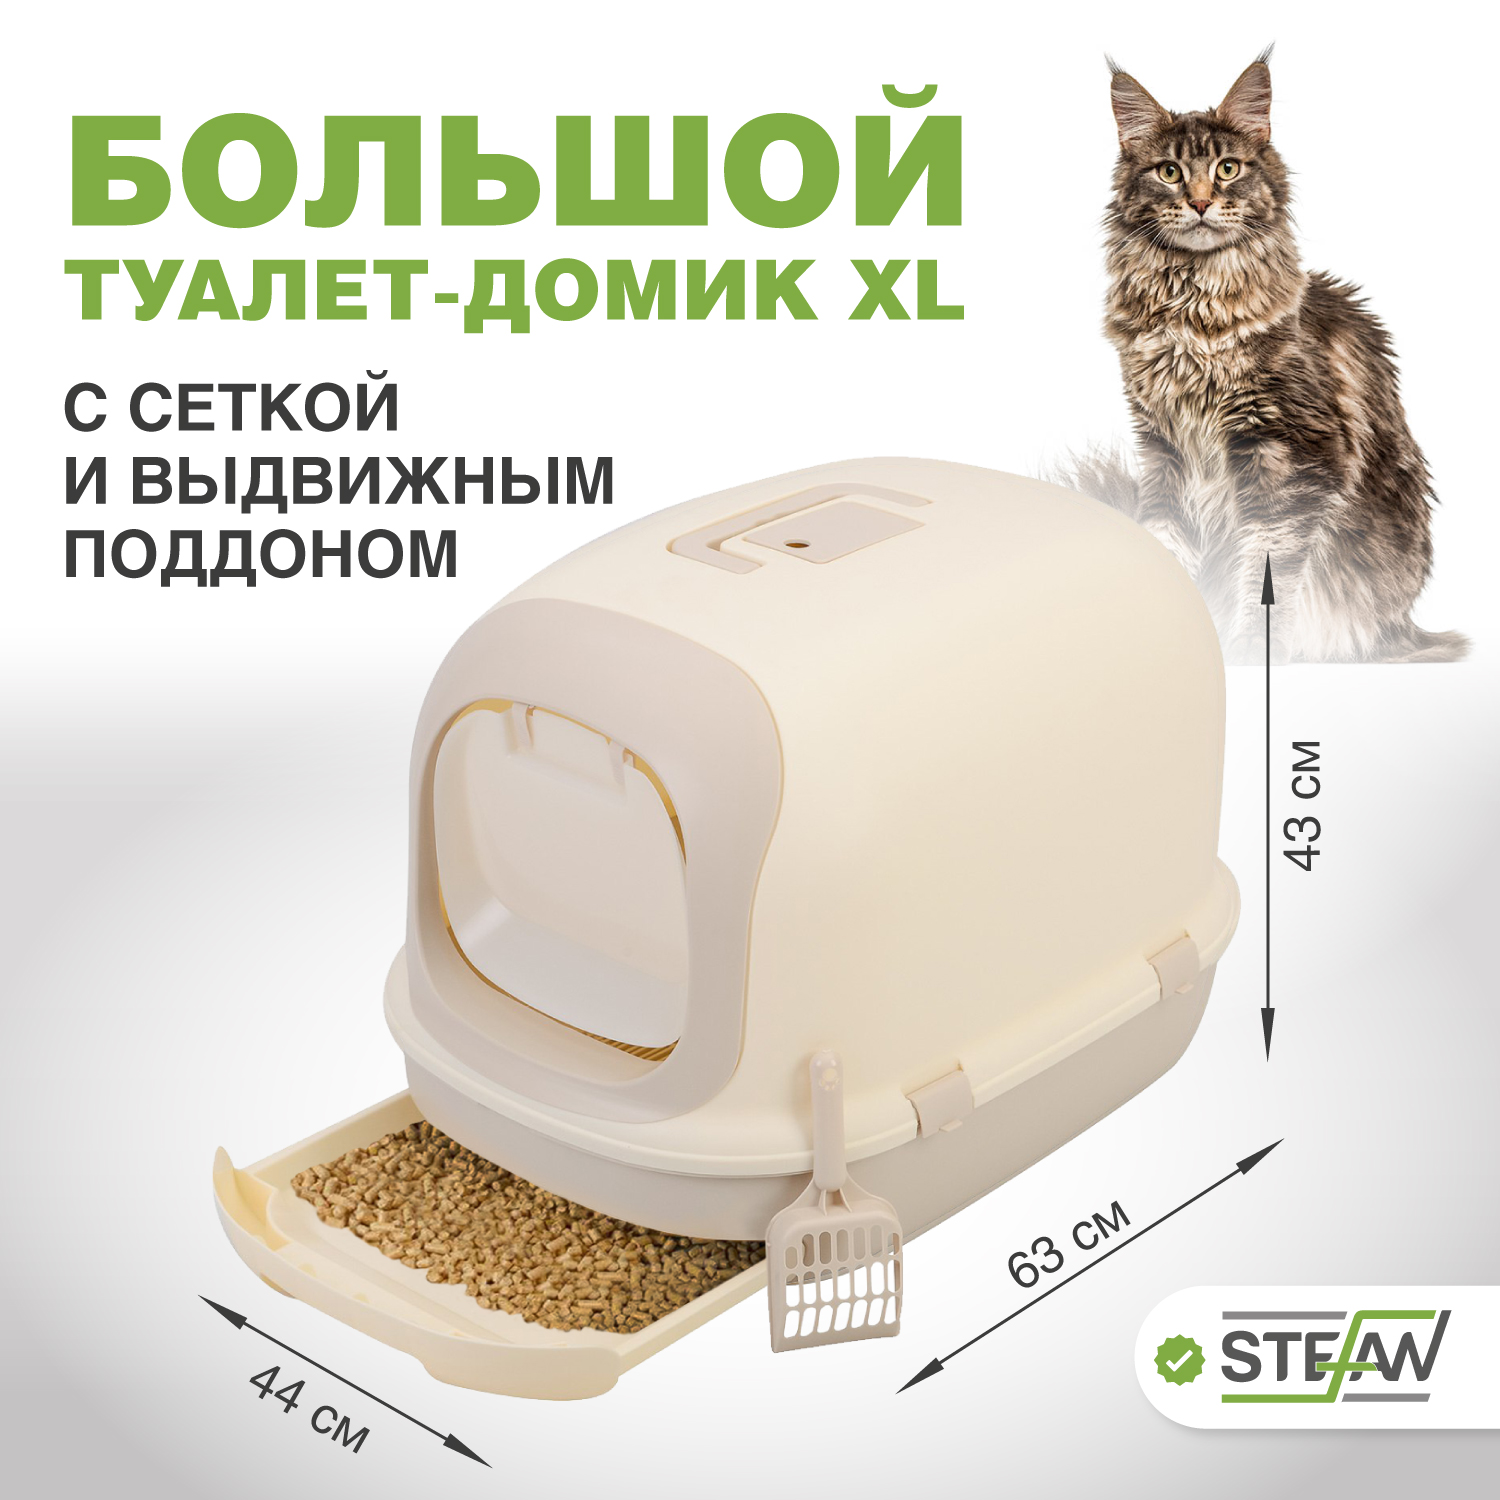 Туалет-домик для кошек STEFAN большой (XL), 63х41х43, светло-коричневый, BP1903